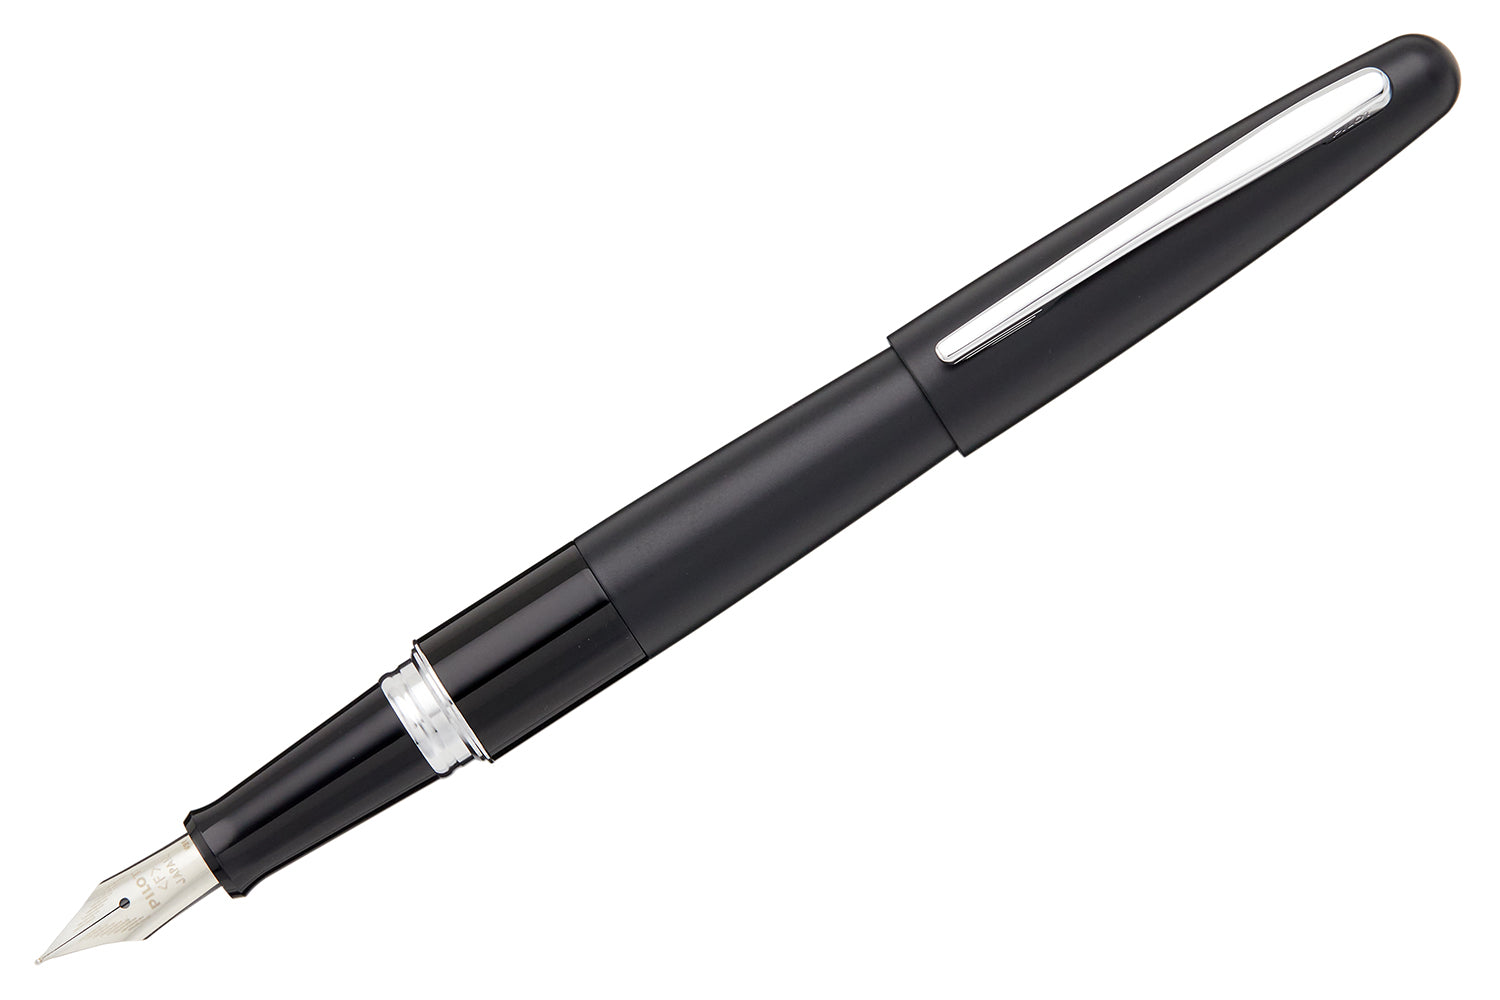 Pilot Metropolitan Fountain Pen - Black Plain - The Goulet Pen Company